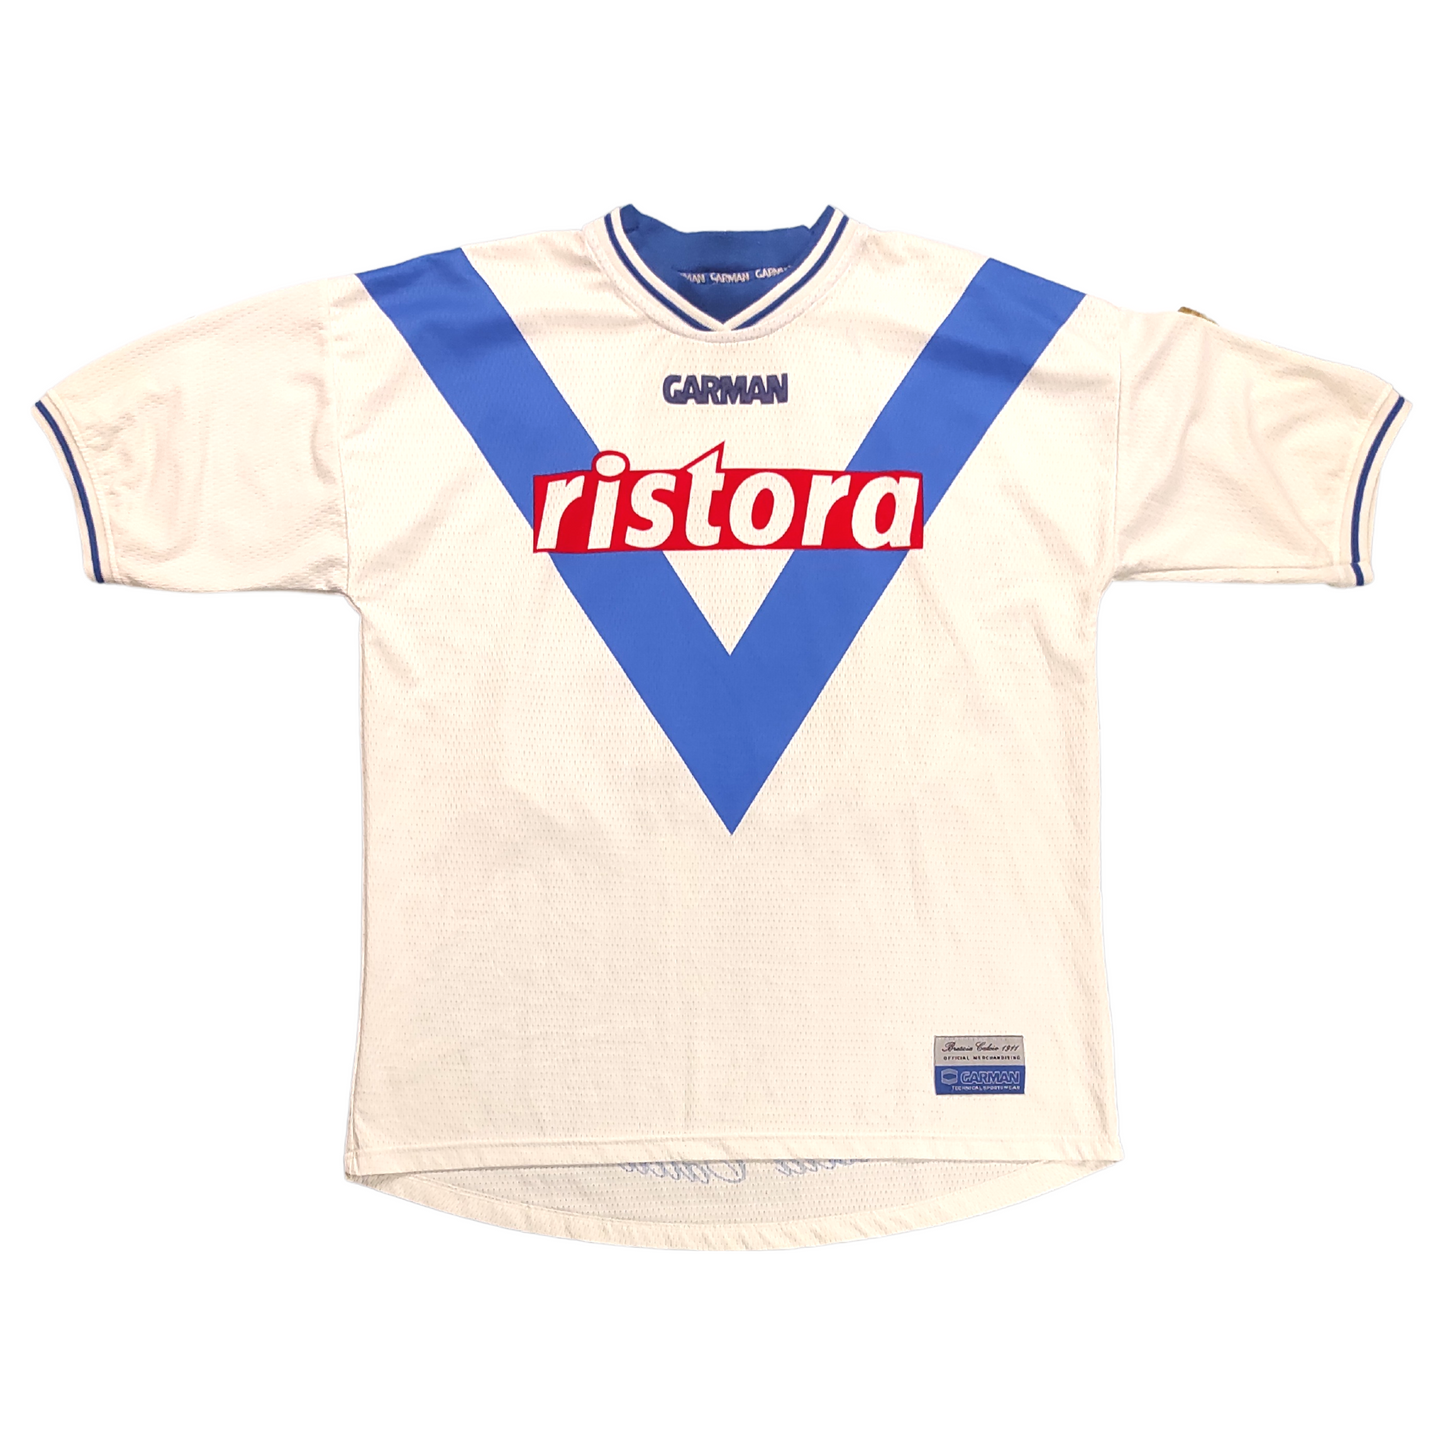 Brescia Away Shirt 2000-2001 Baggio (M)